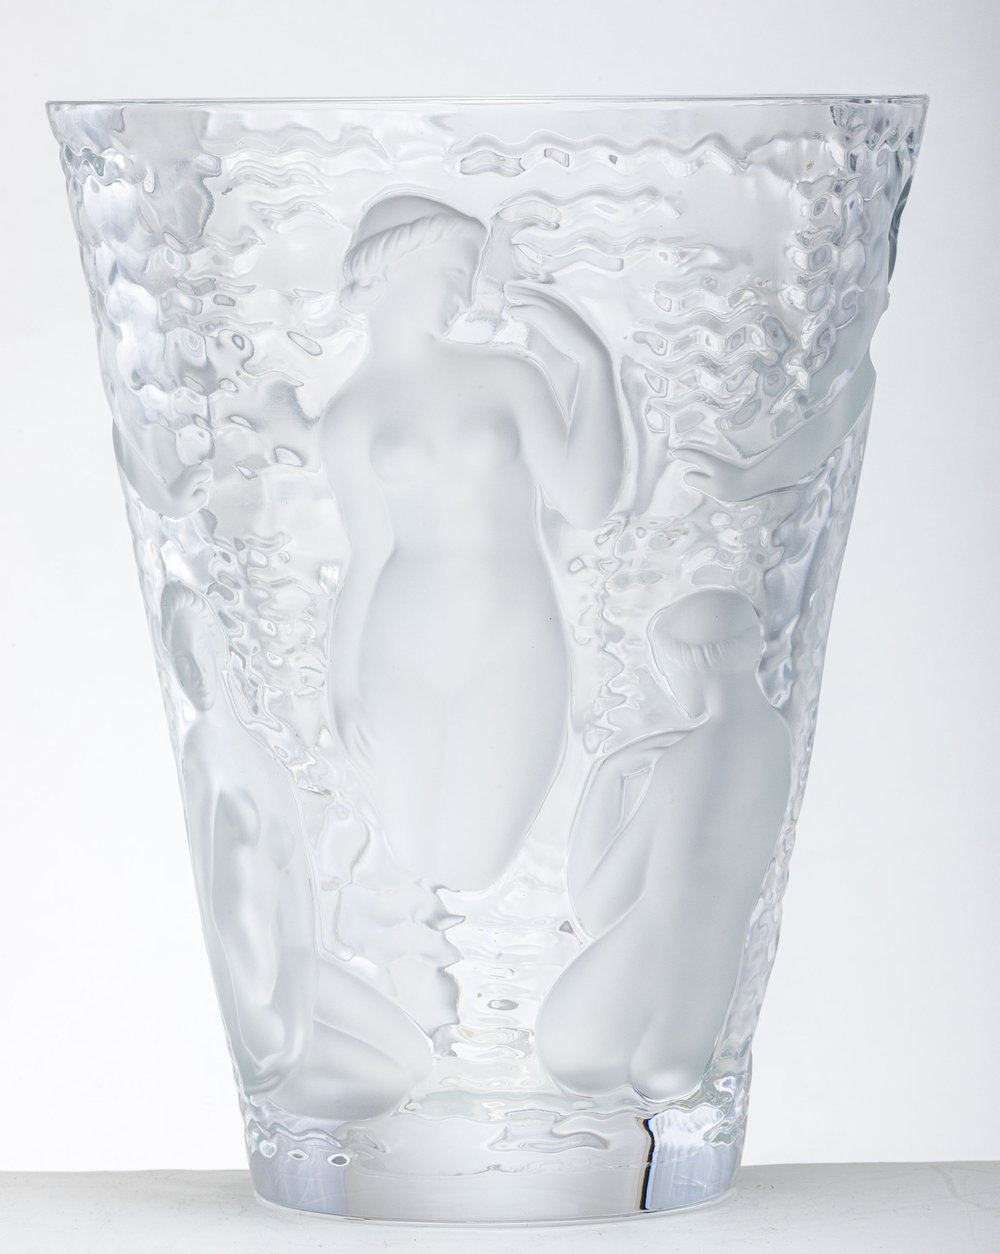 Vase "Ondines" Lalique, France - Image 4 of 5